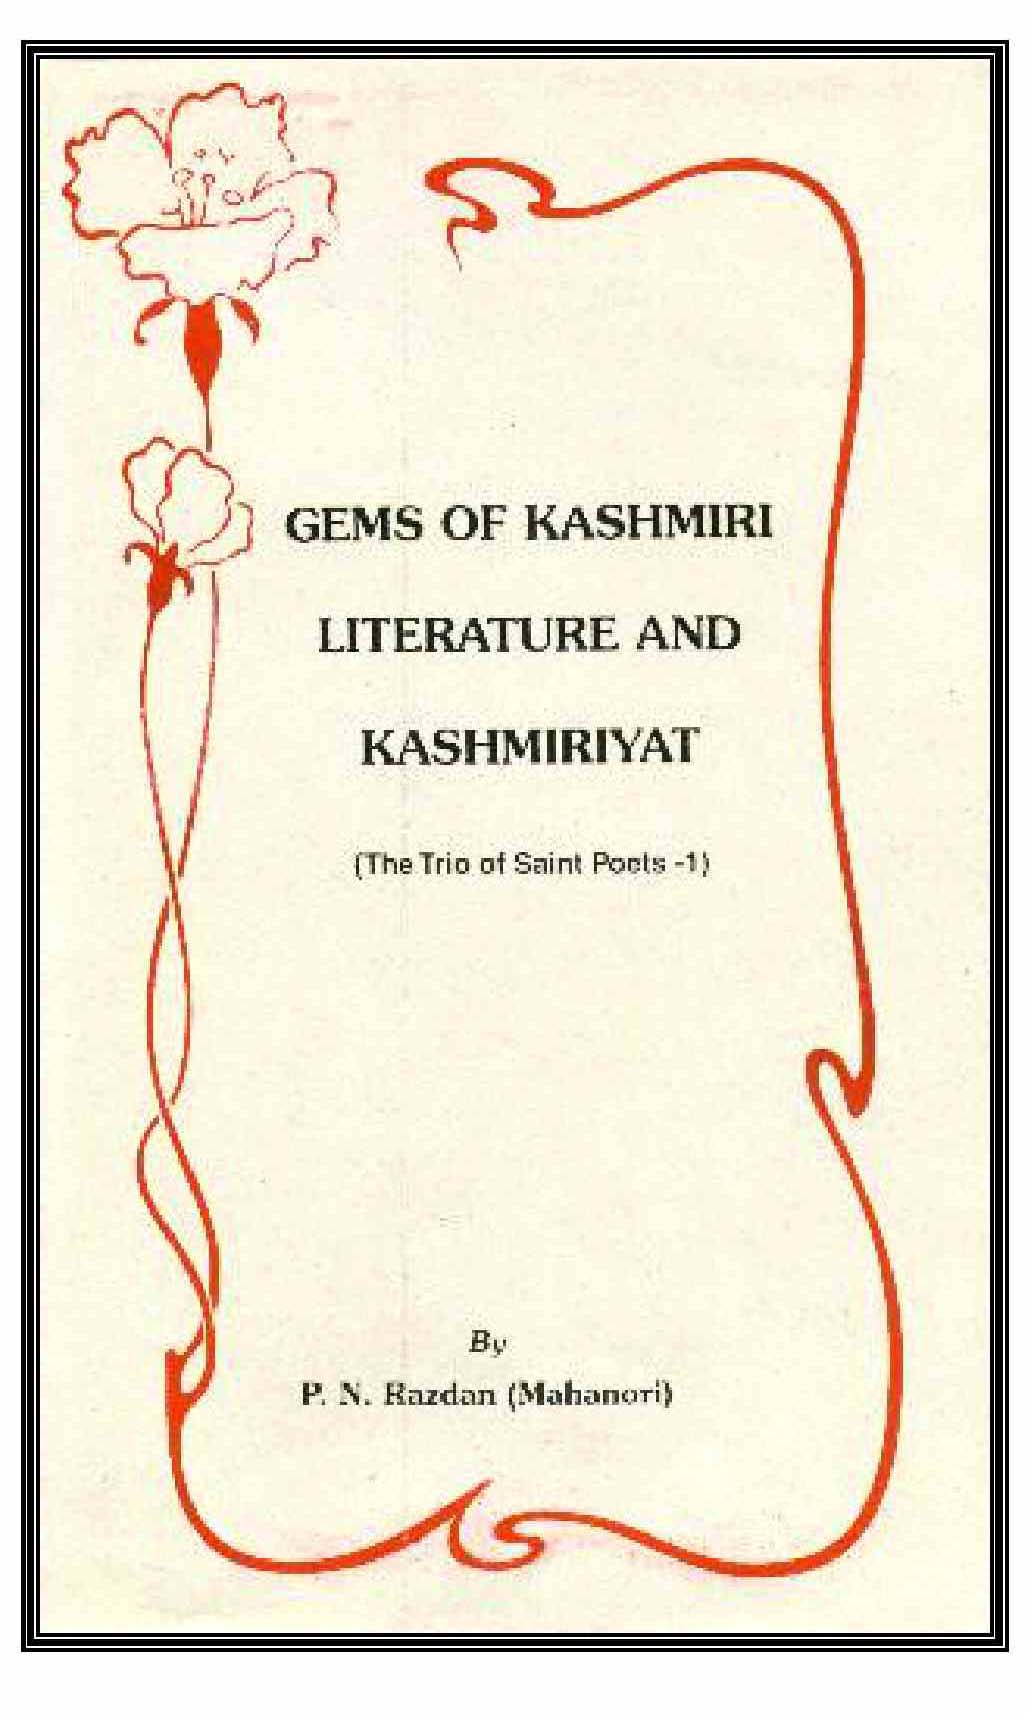 gems of kashmiri literature & kashmiriyat